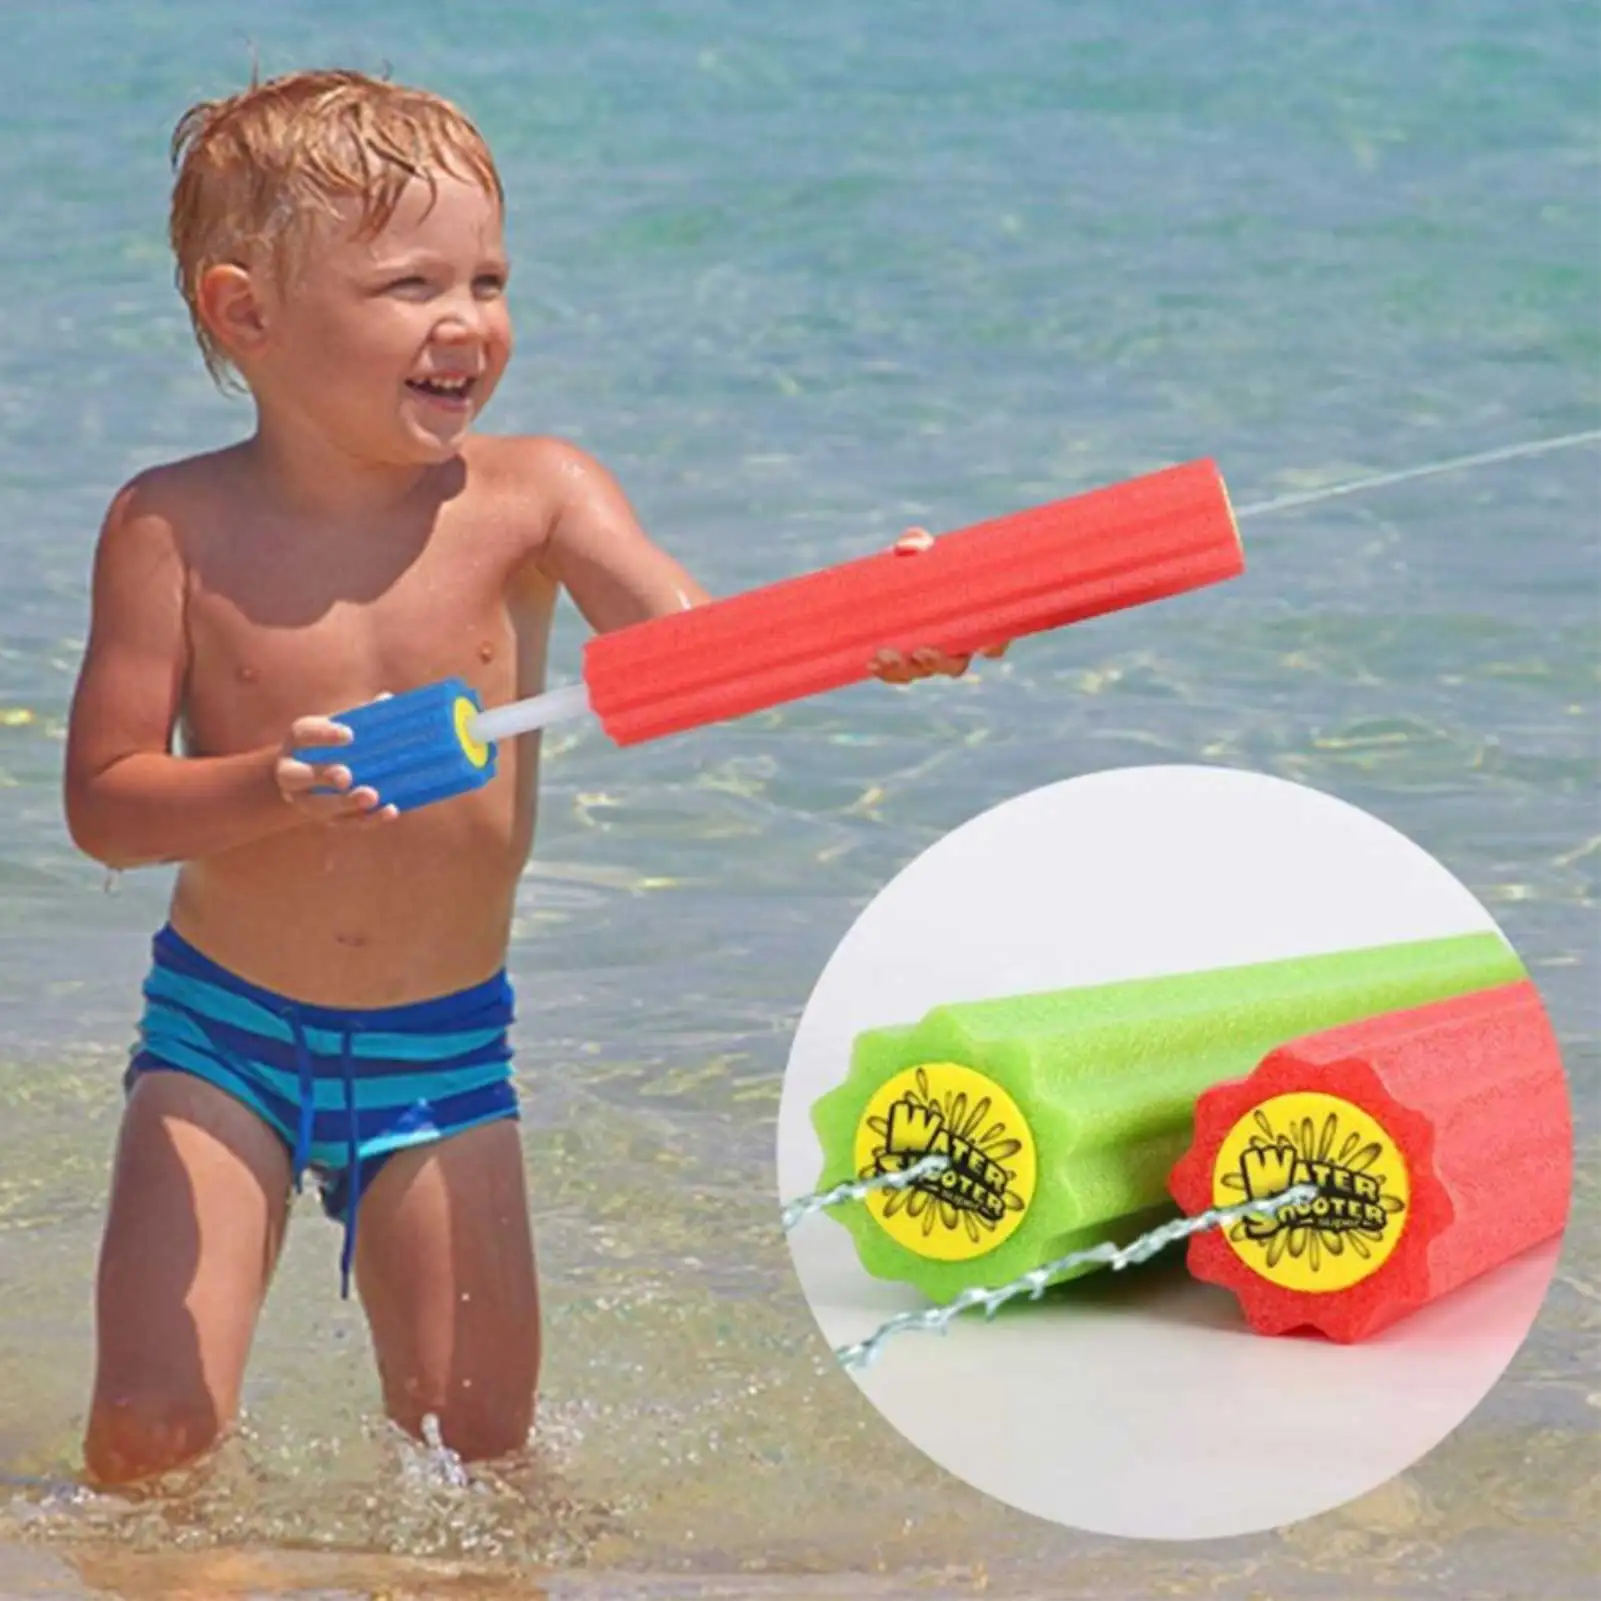 

1pc Water Gun Toy EVA Foam Outdoor Beach Water Shooter Squirt Pool Toy For Children Summer Party Beach Games Watergun